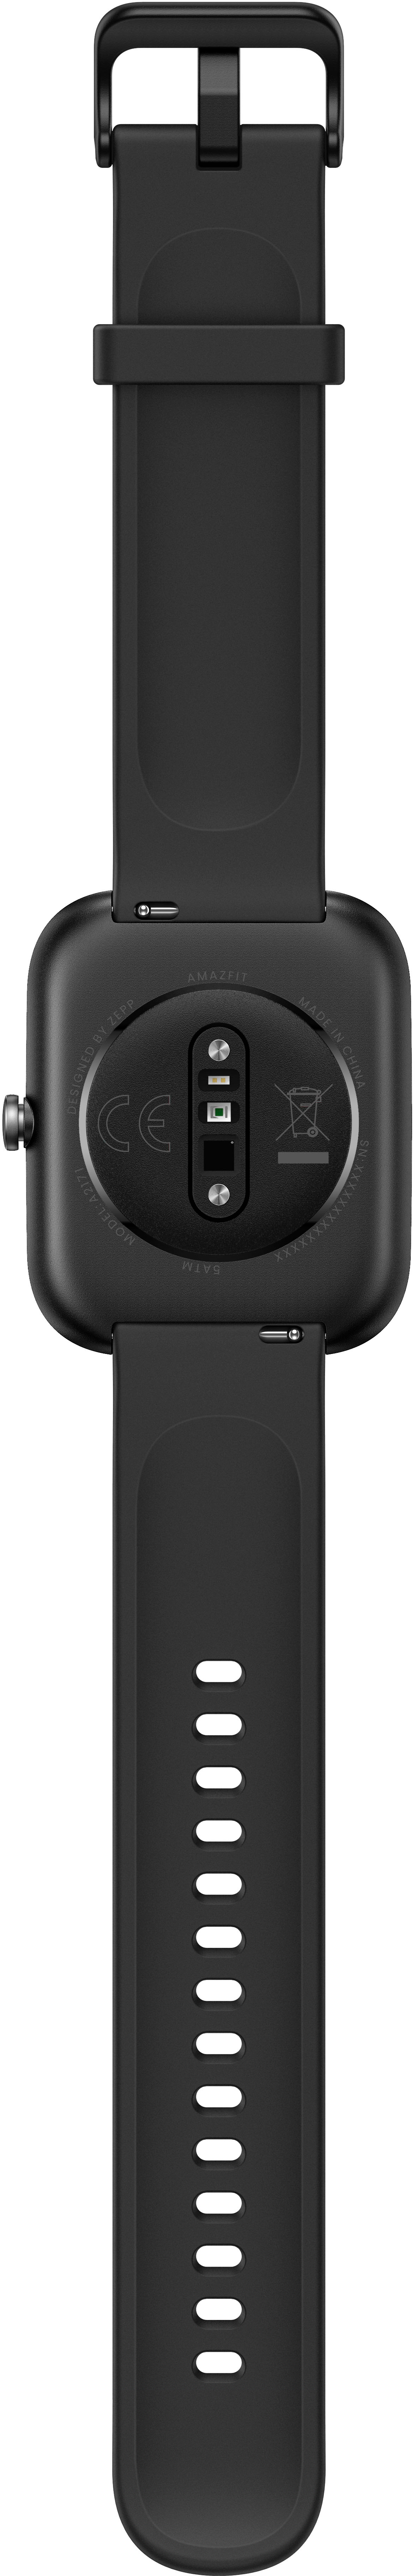 New Amazfit Bip 3 Pro Smartwatch Blood-oxygen Saturation Measurement 60  Sports Modes Smart Watch